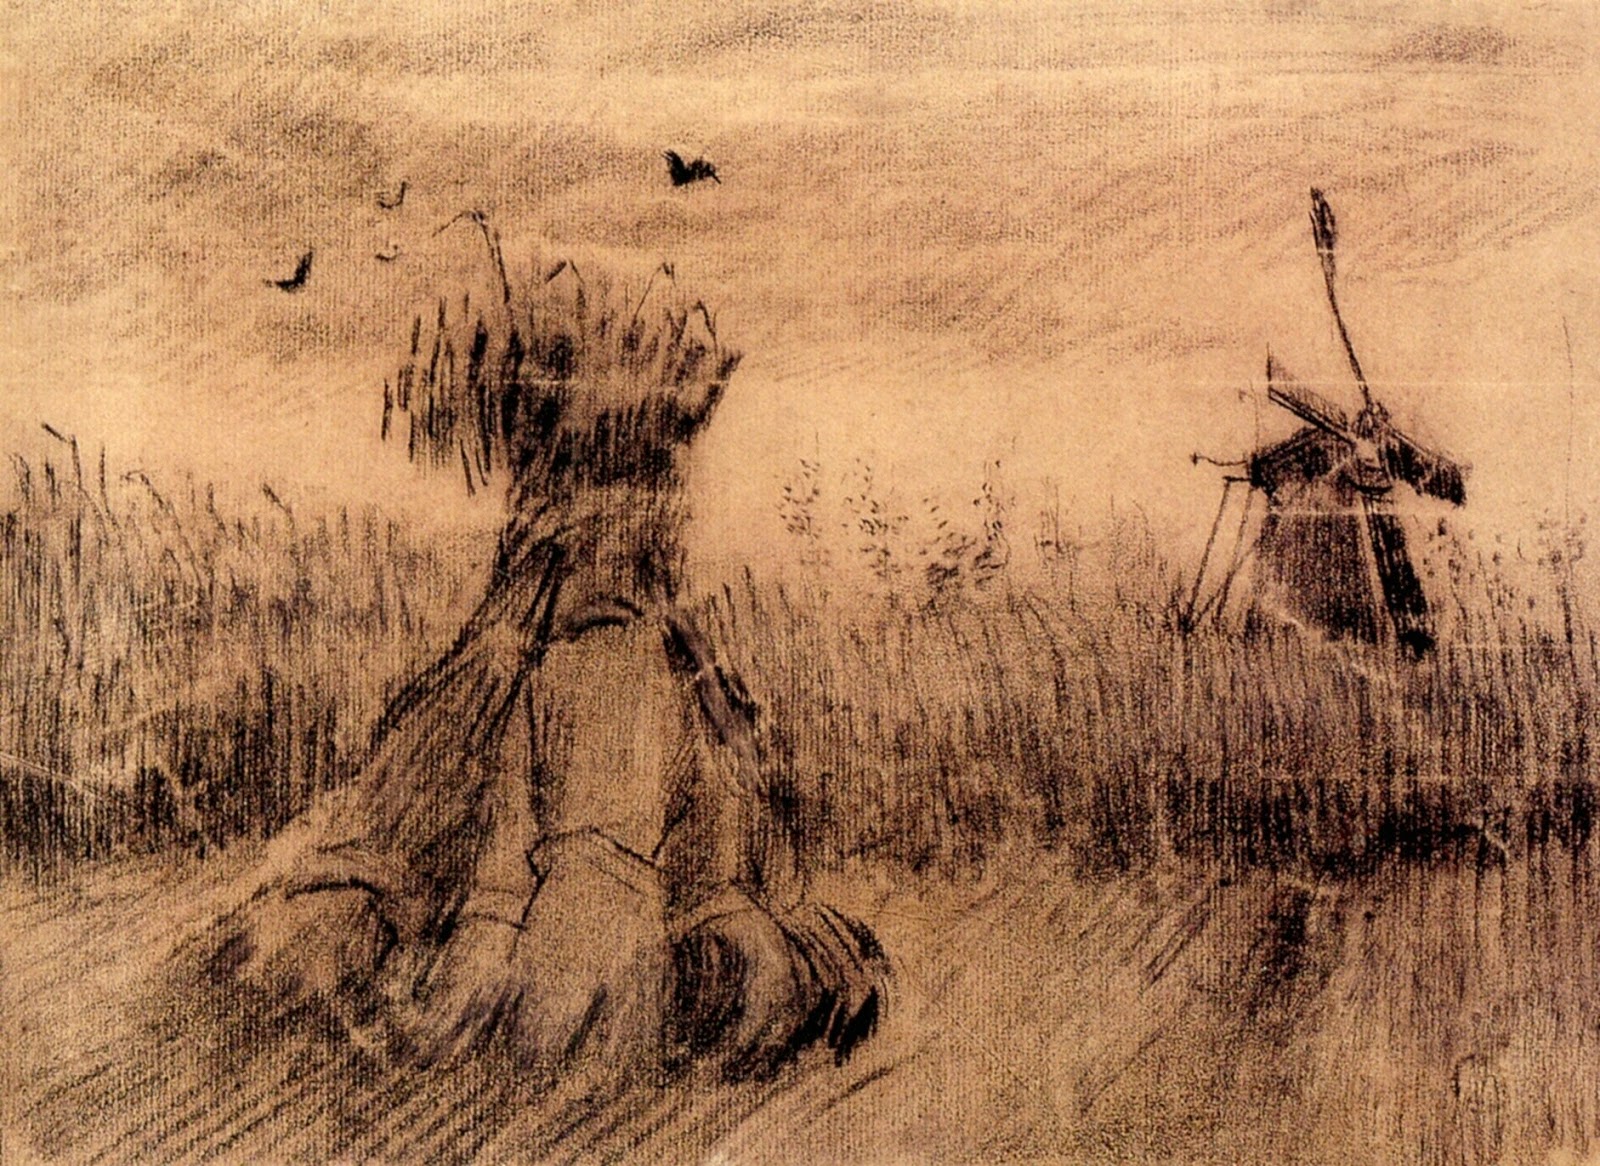 Vincent+Van+Gogh-1853-1890 (843).jpg